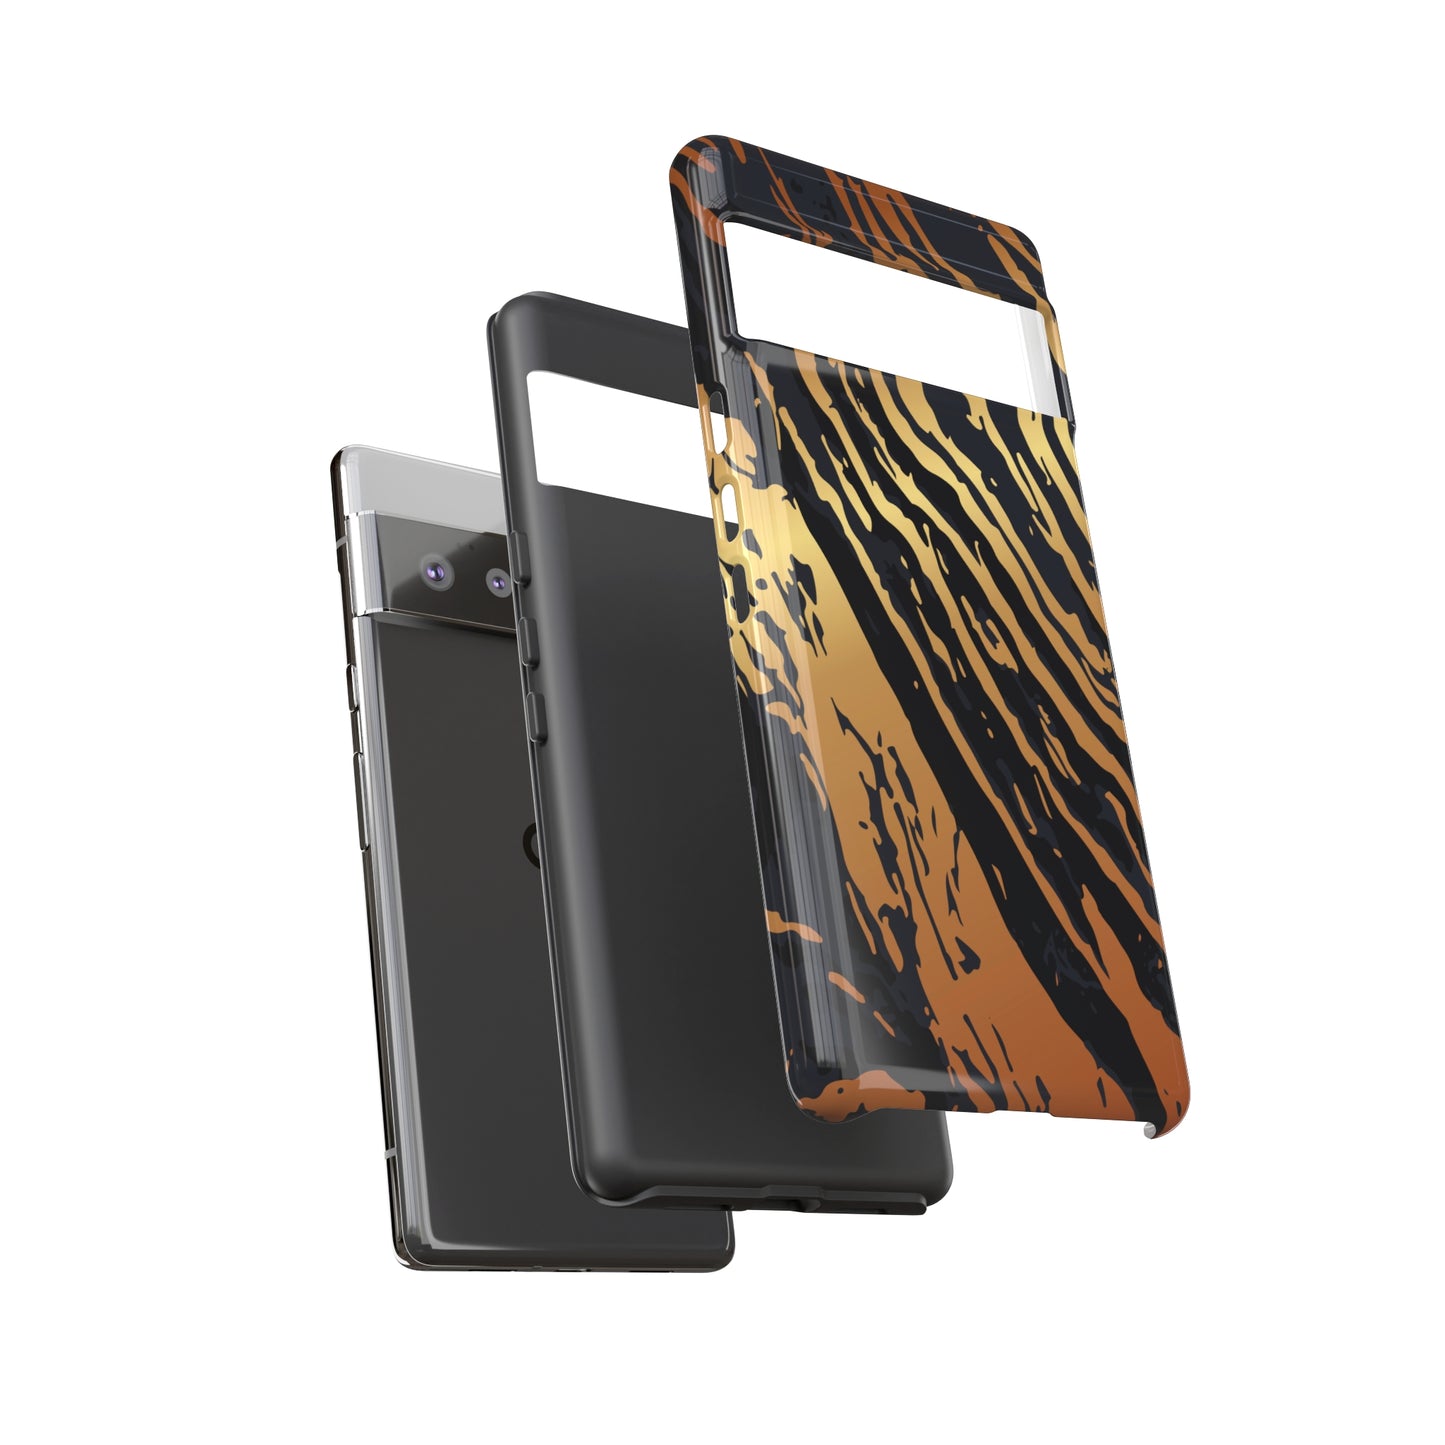 Safari Twilight - Cell Phone Case